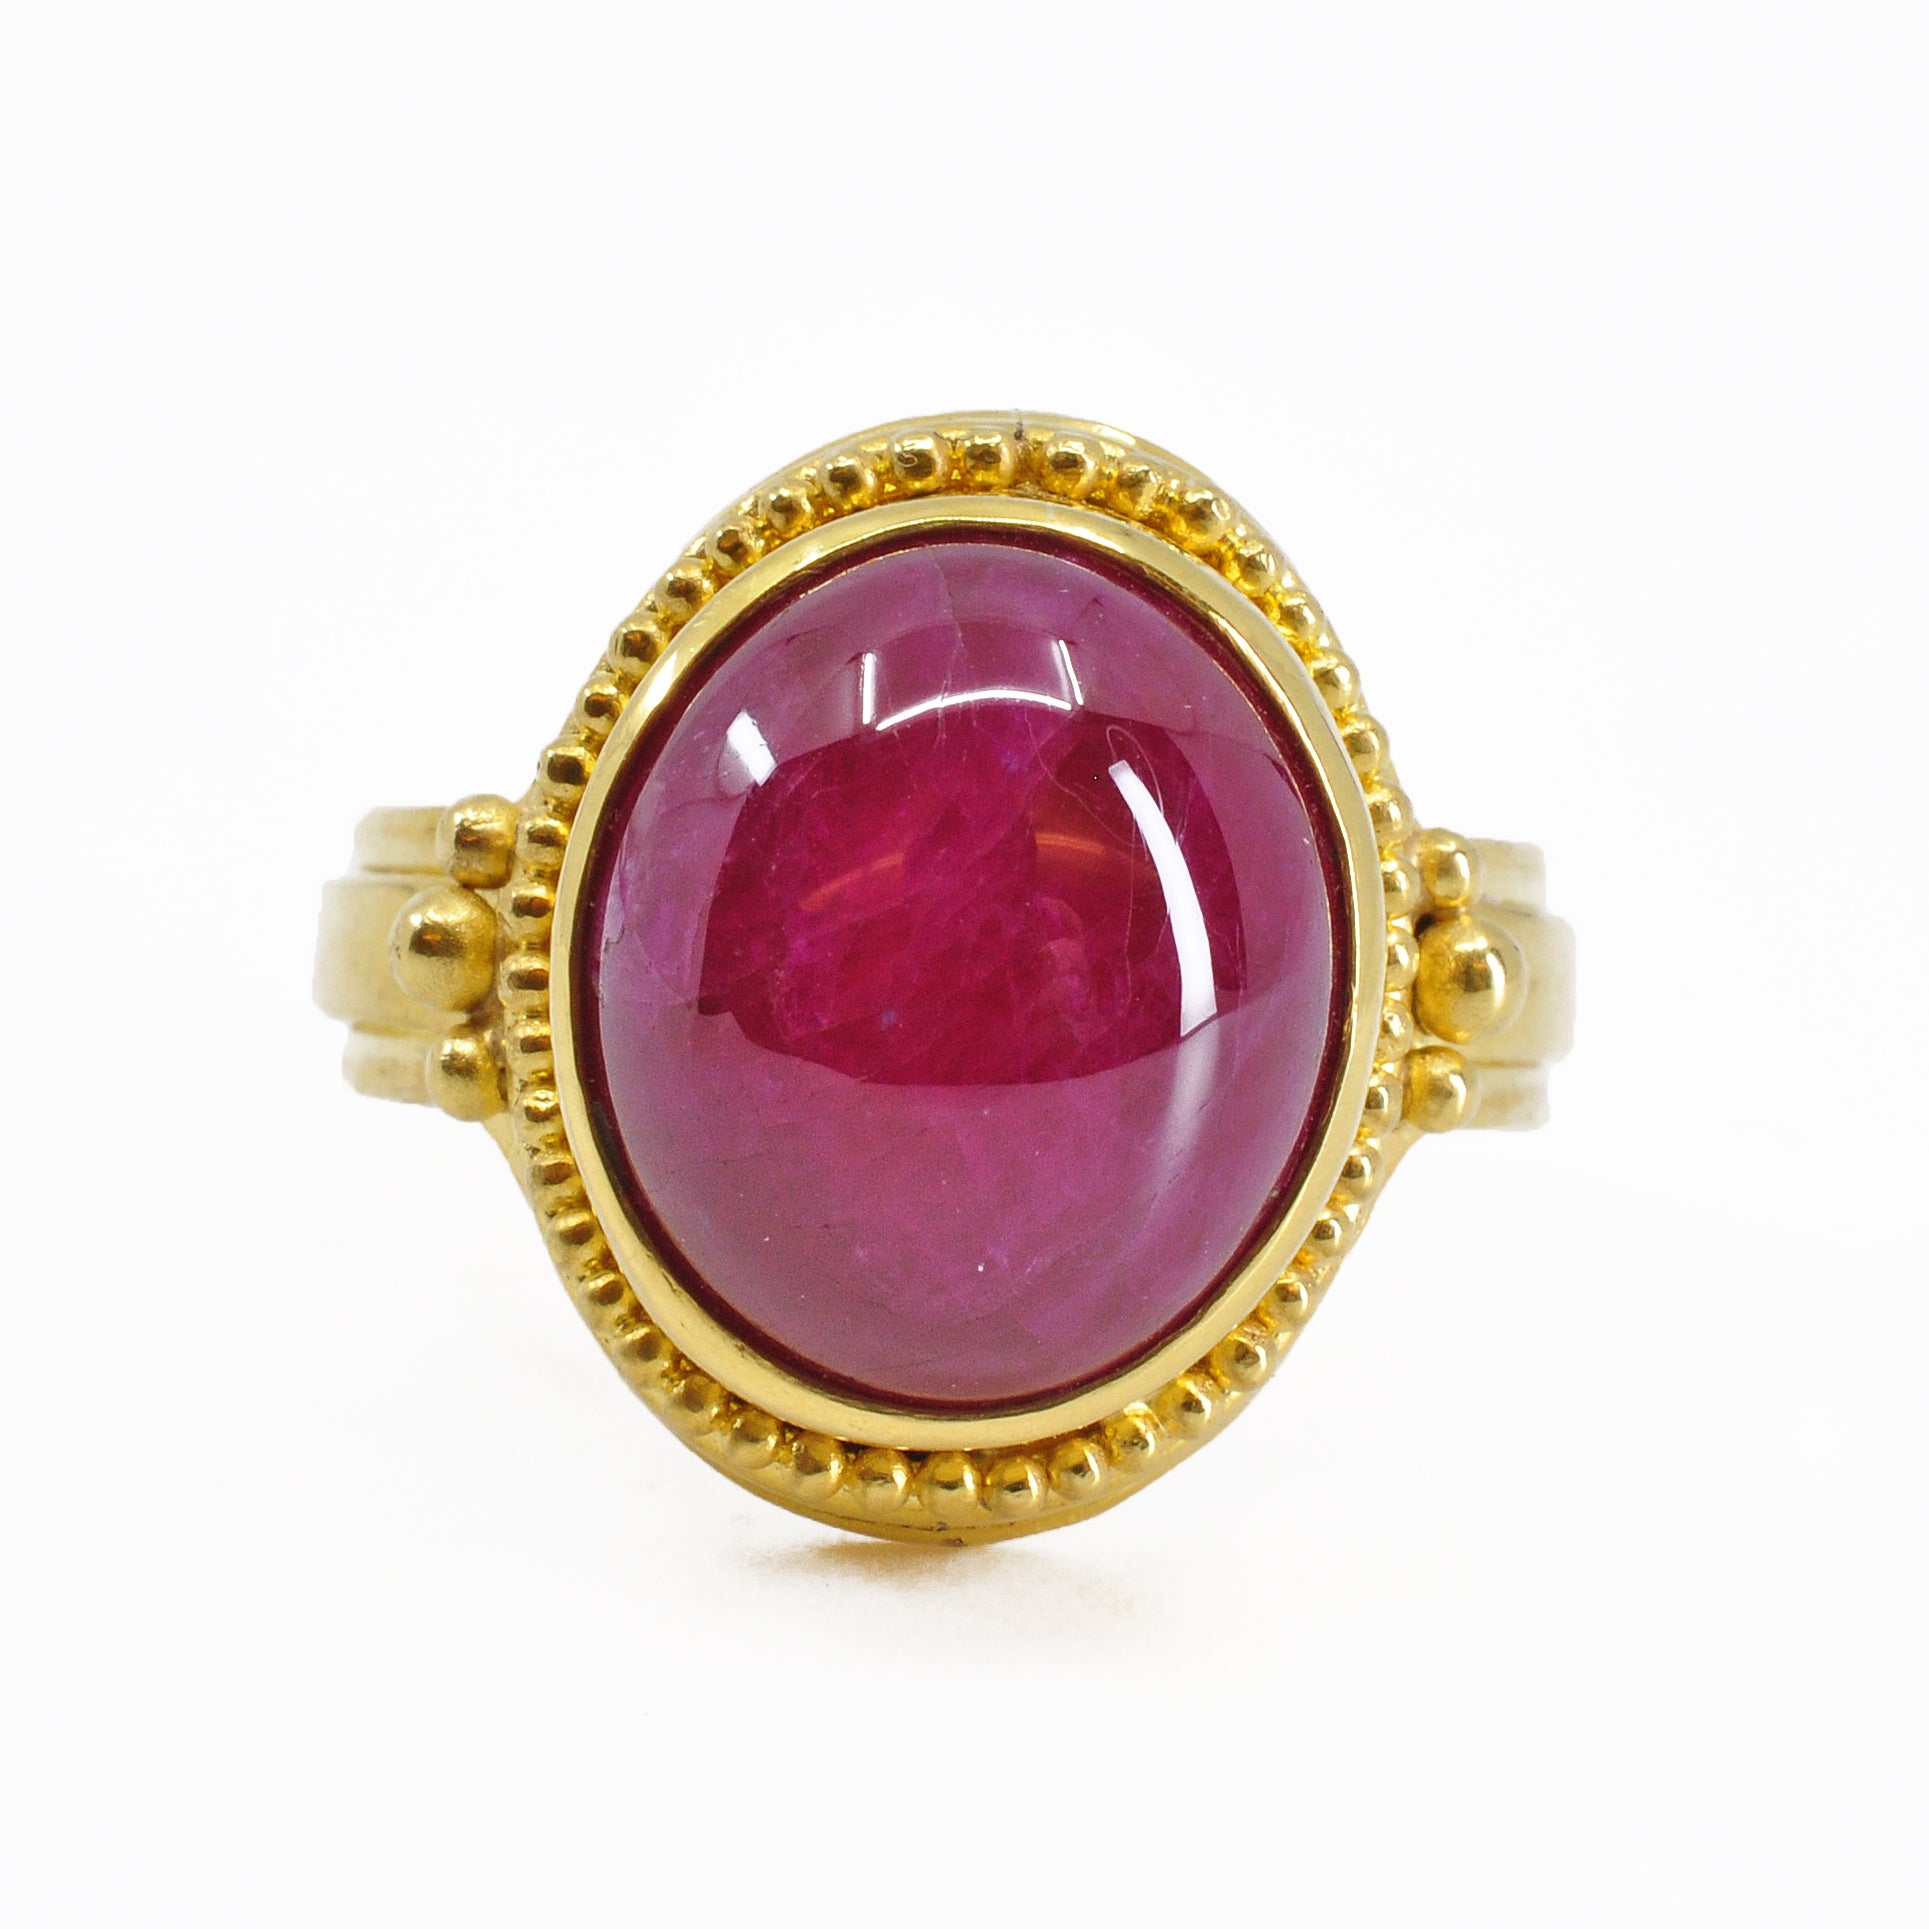 Gorgeous Ruby 12.41 cts Oval Cabochon 22K Handcrafted Gemstone Ring - GGO-070 - Crystalarium